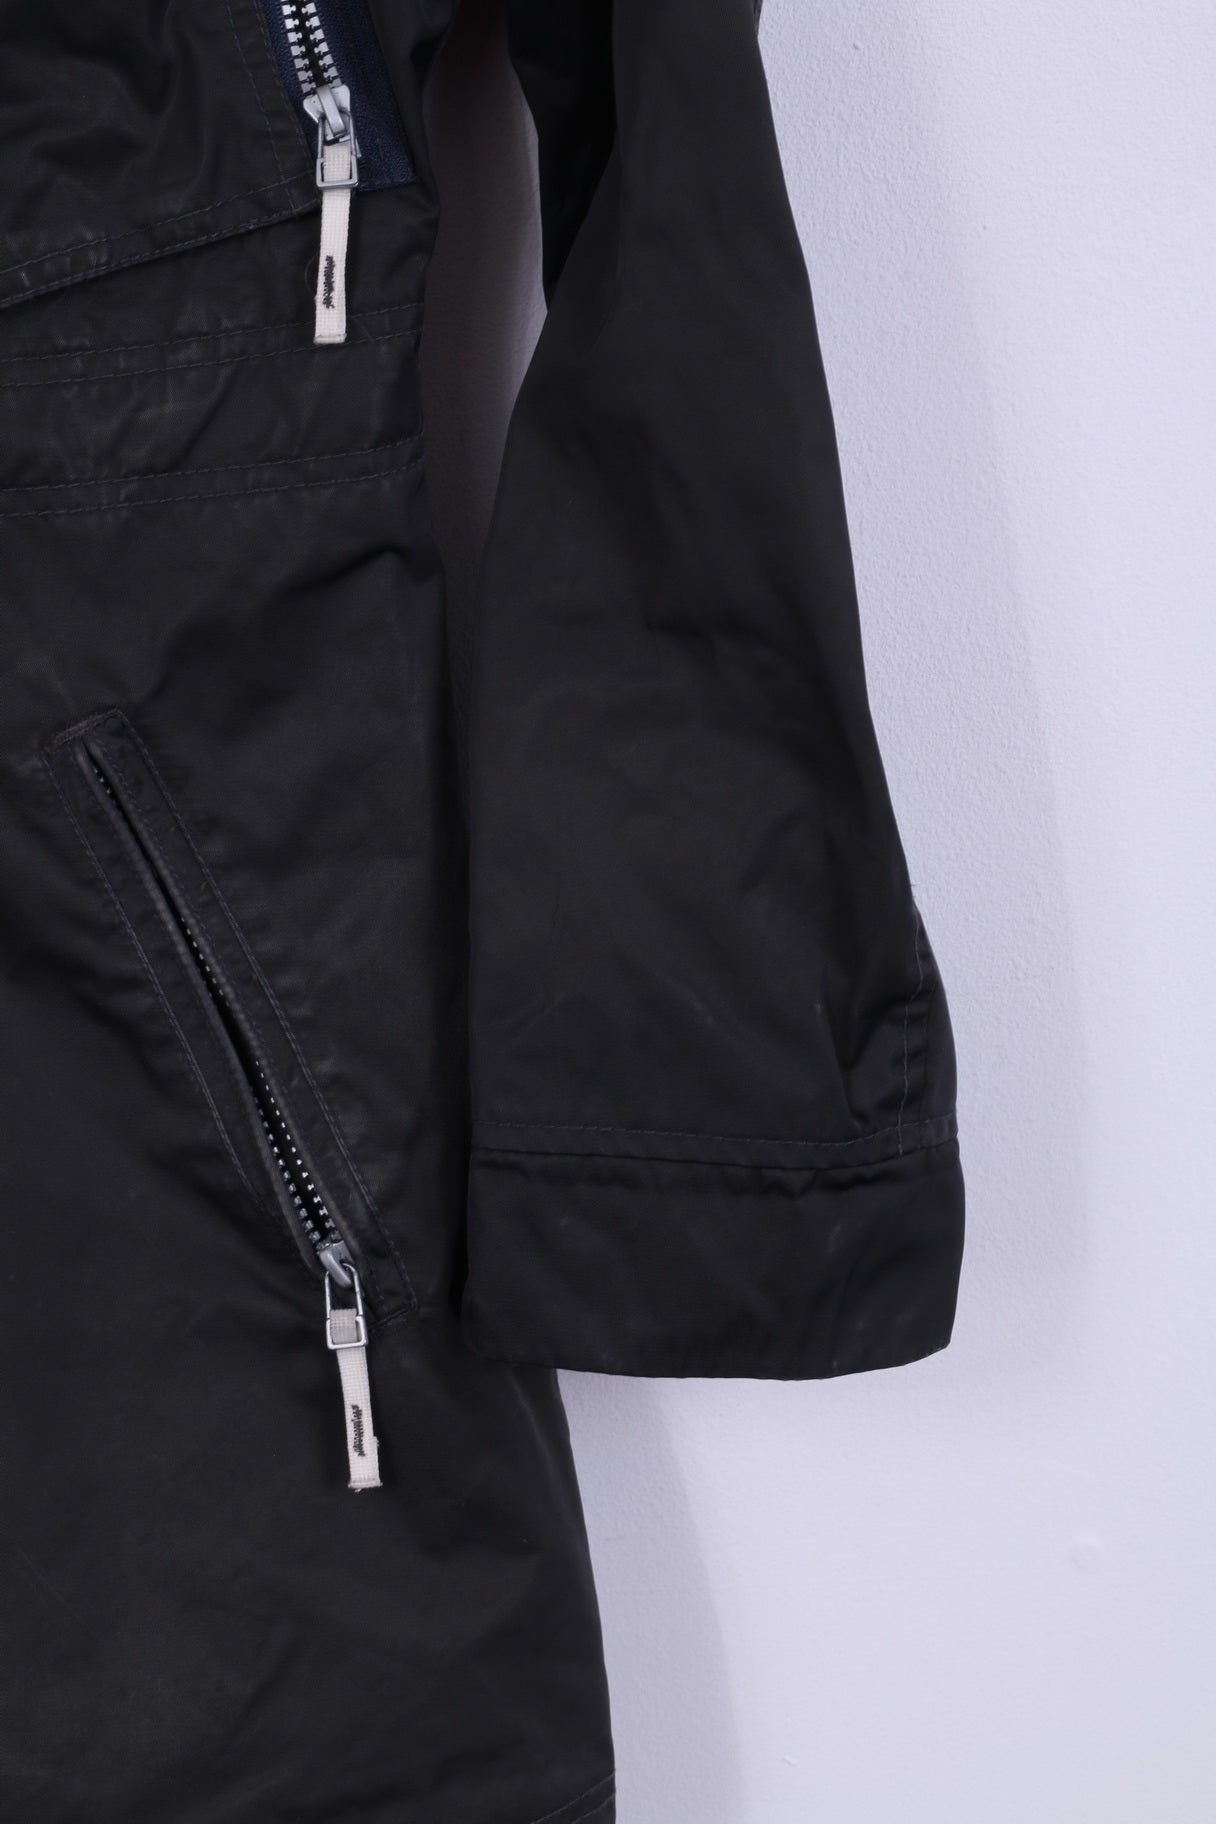 Gaastra Womens M Long Jacket Hooded Black Pockets Light Full Zipper Coat